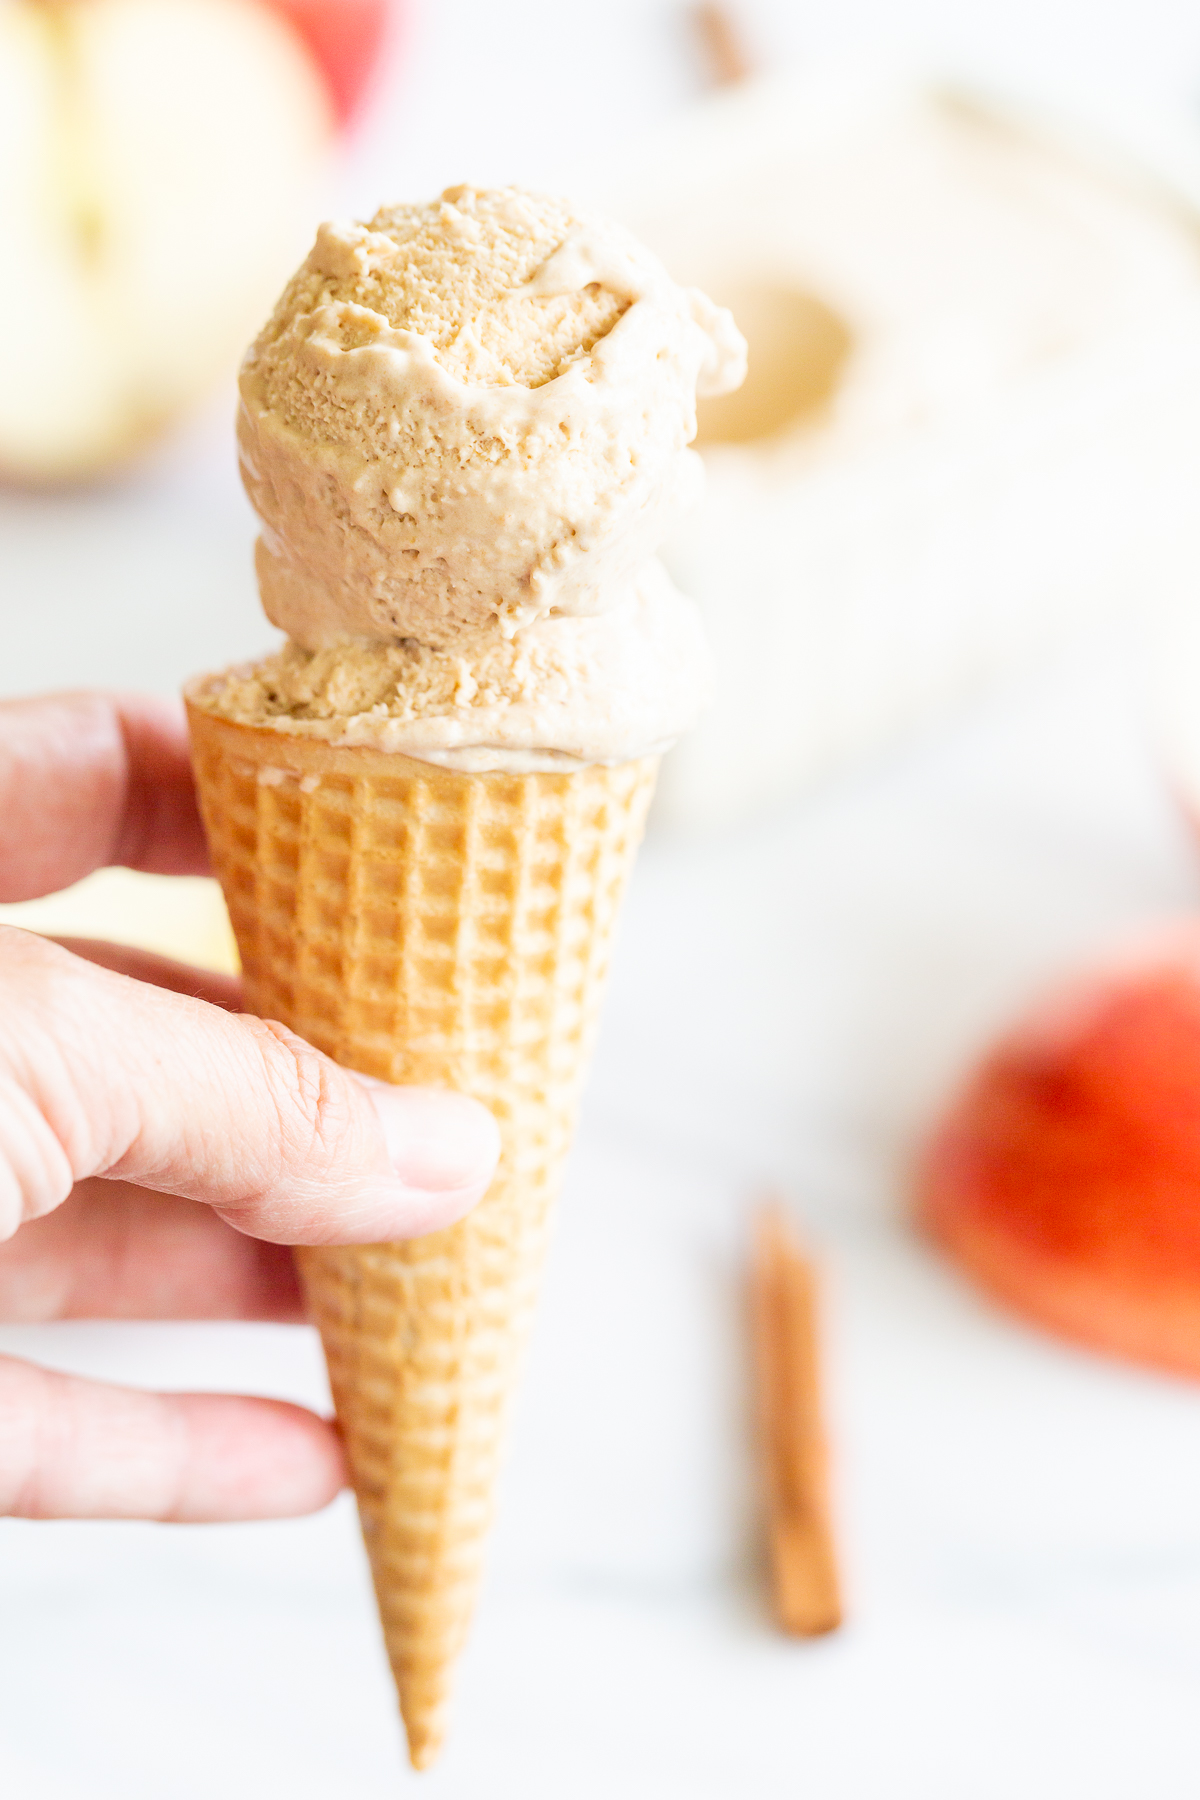 A hand holding an apple ice cream cone